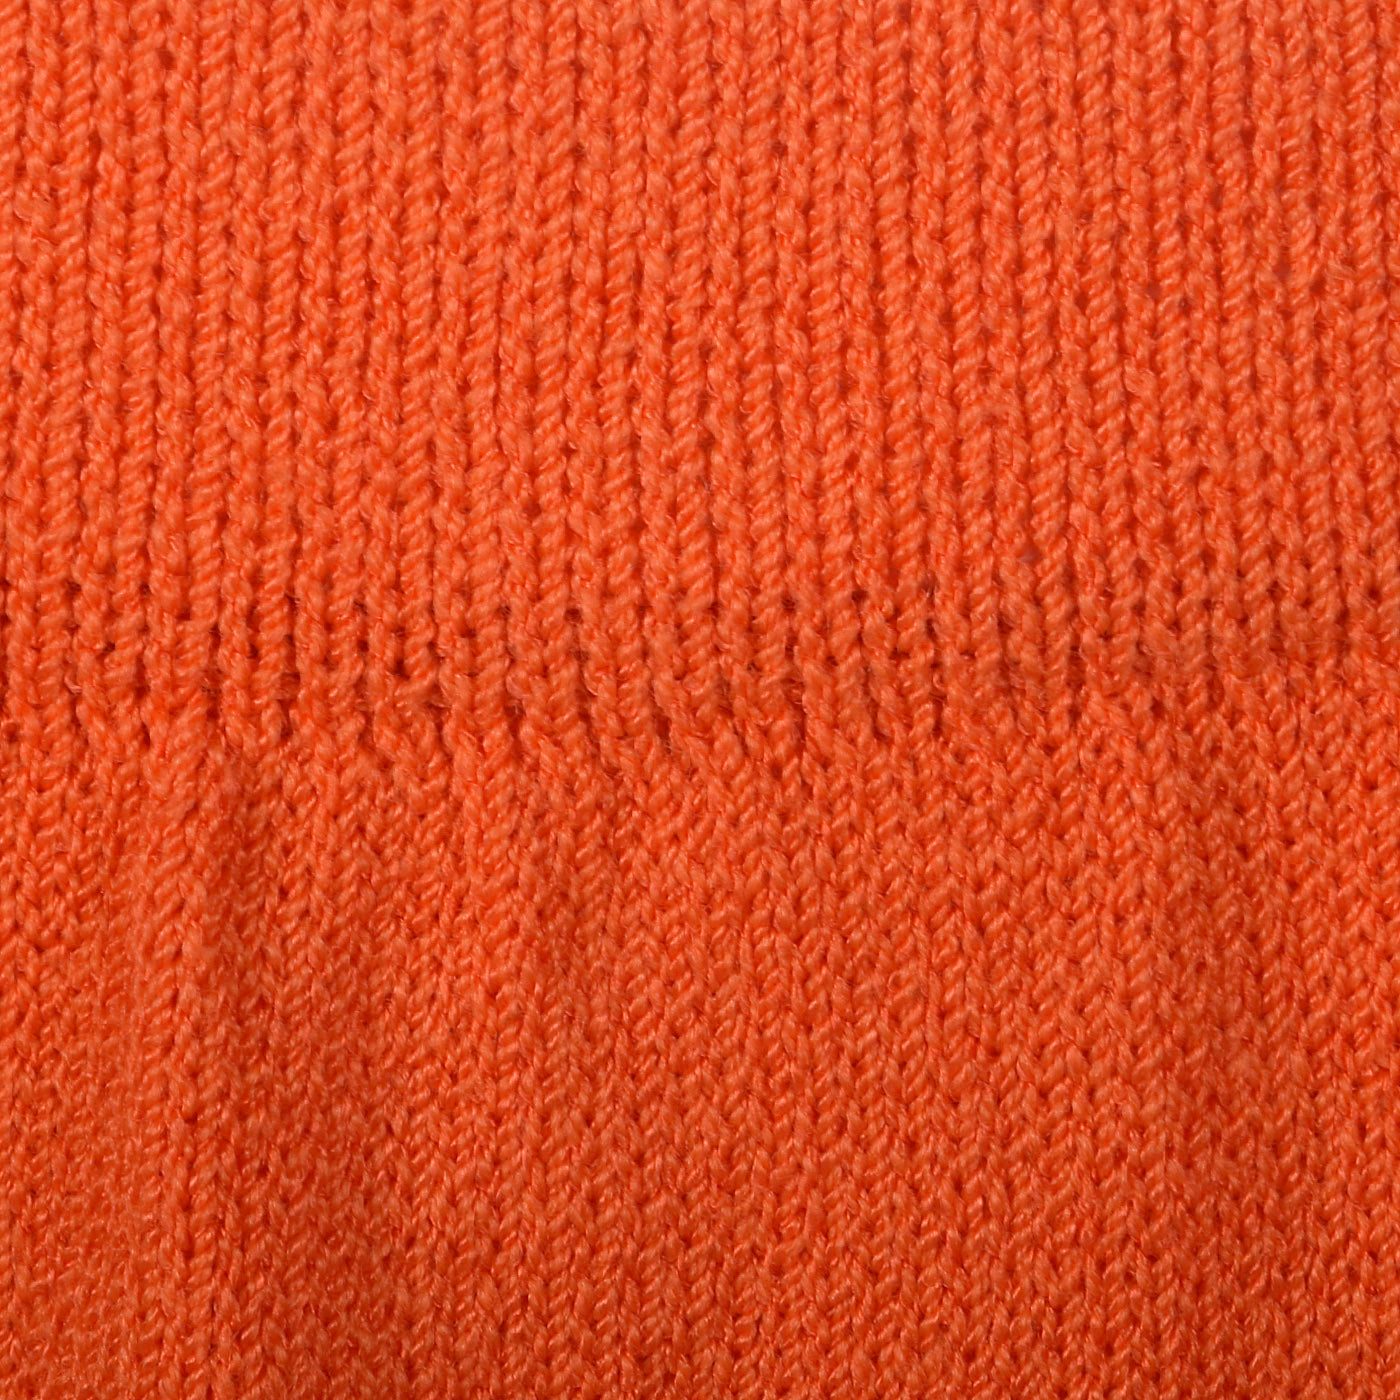 2010s Bright Orange Pencil Skirt